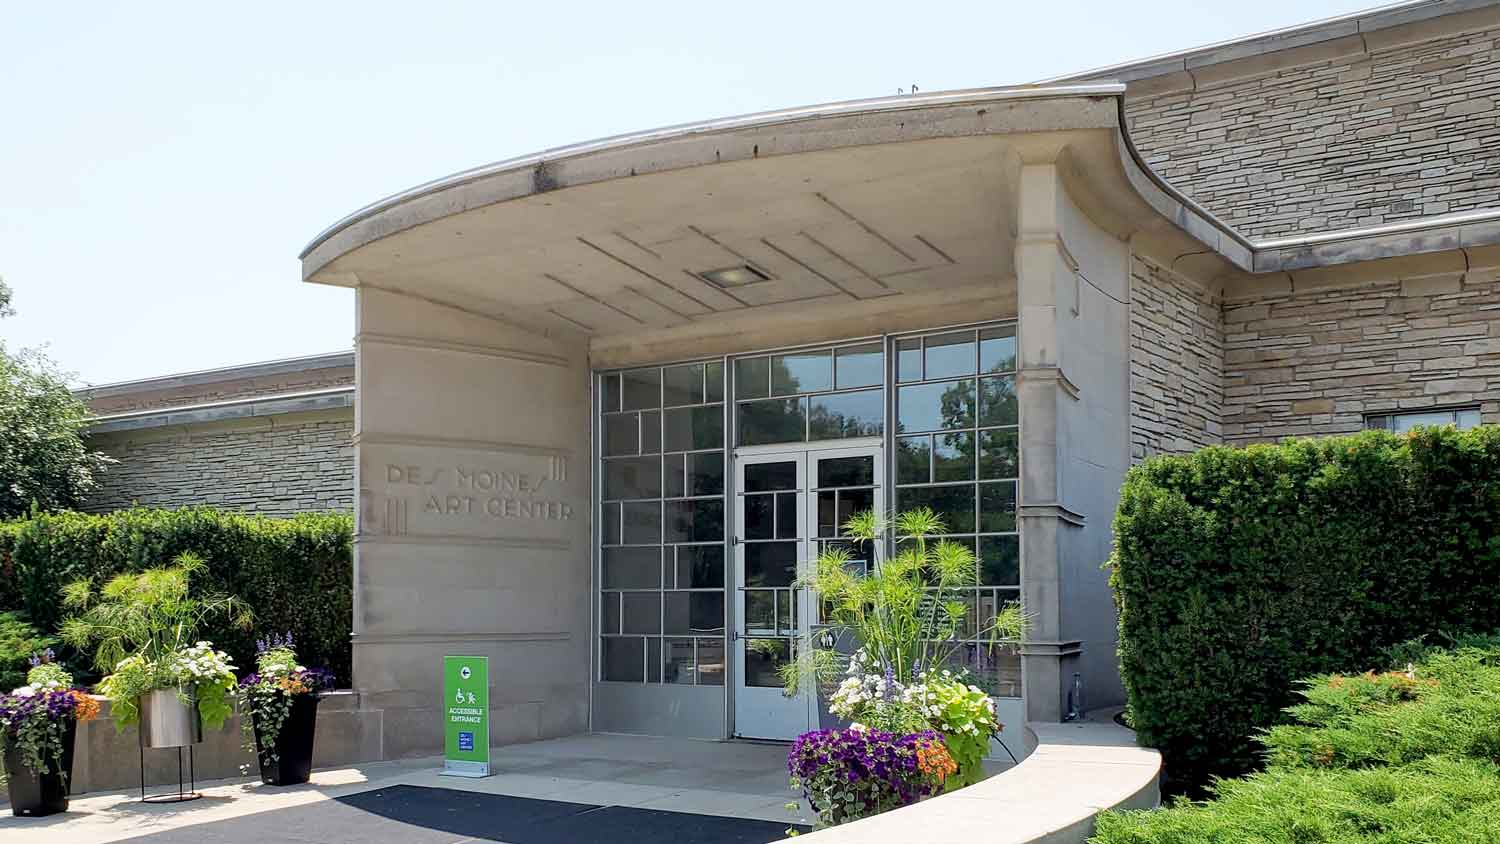 Original building and main entrance to the Des Moines Art Center, designed by Eliel Saarinen.